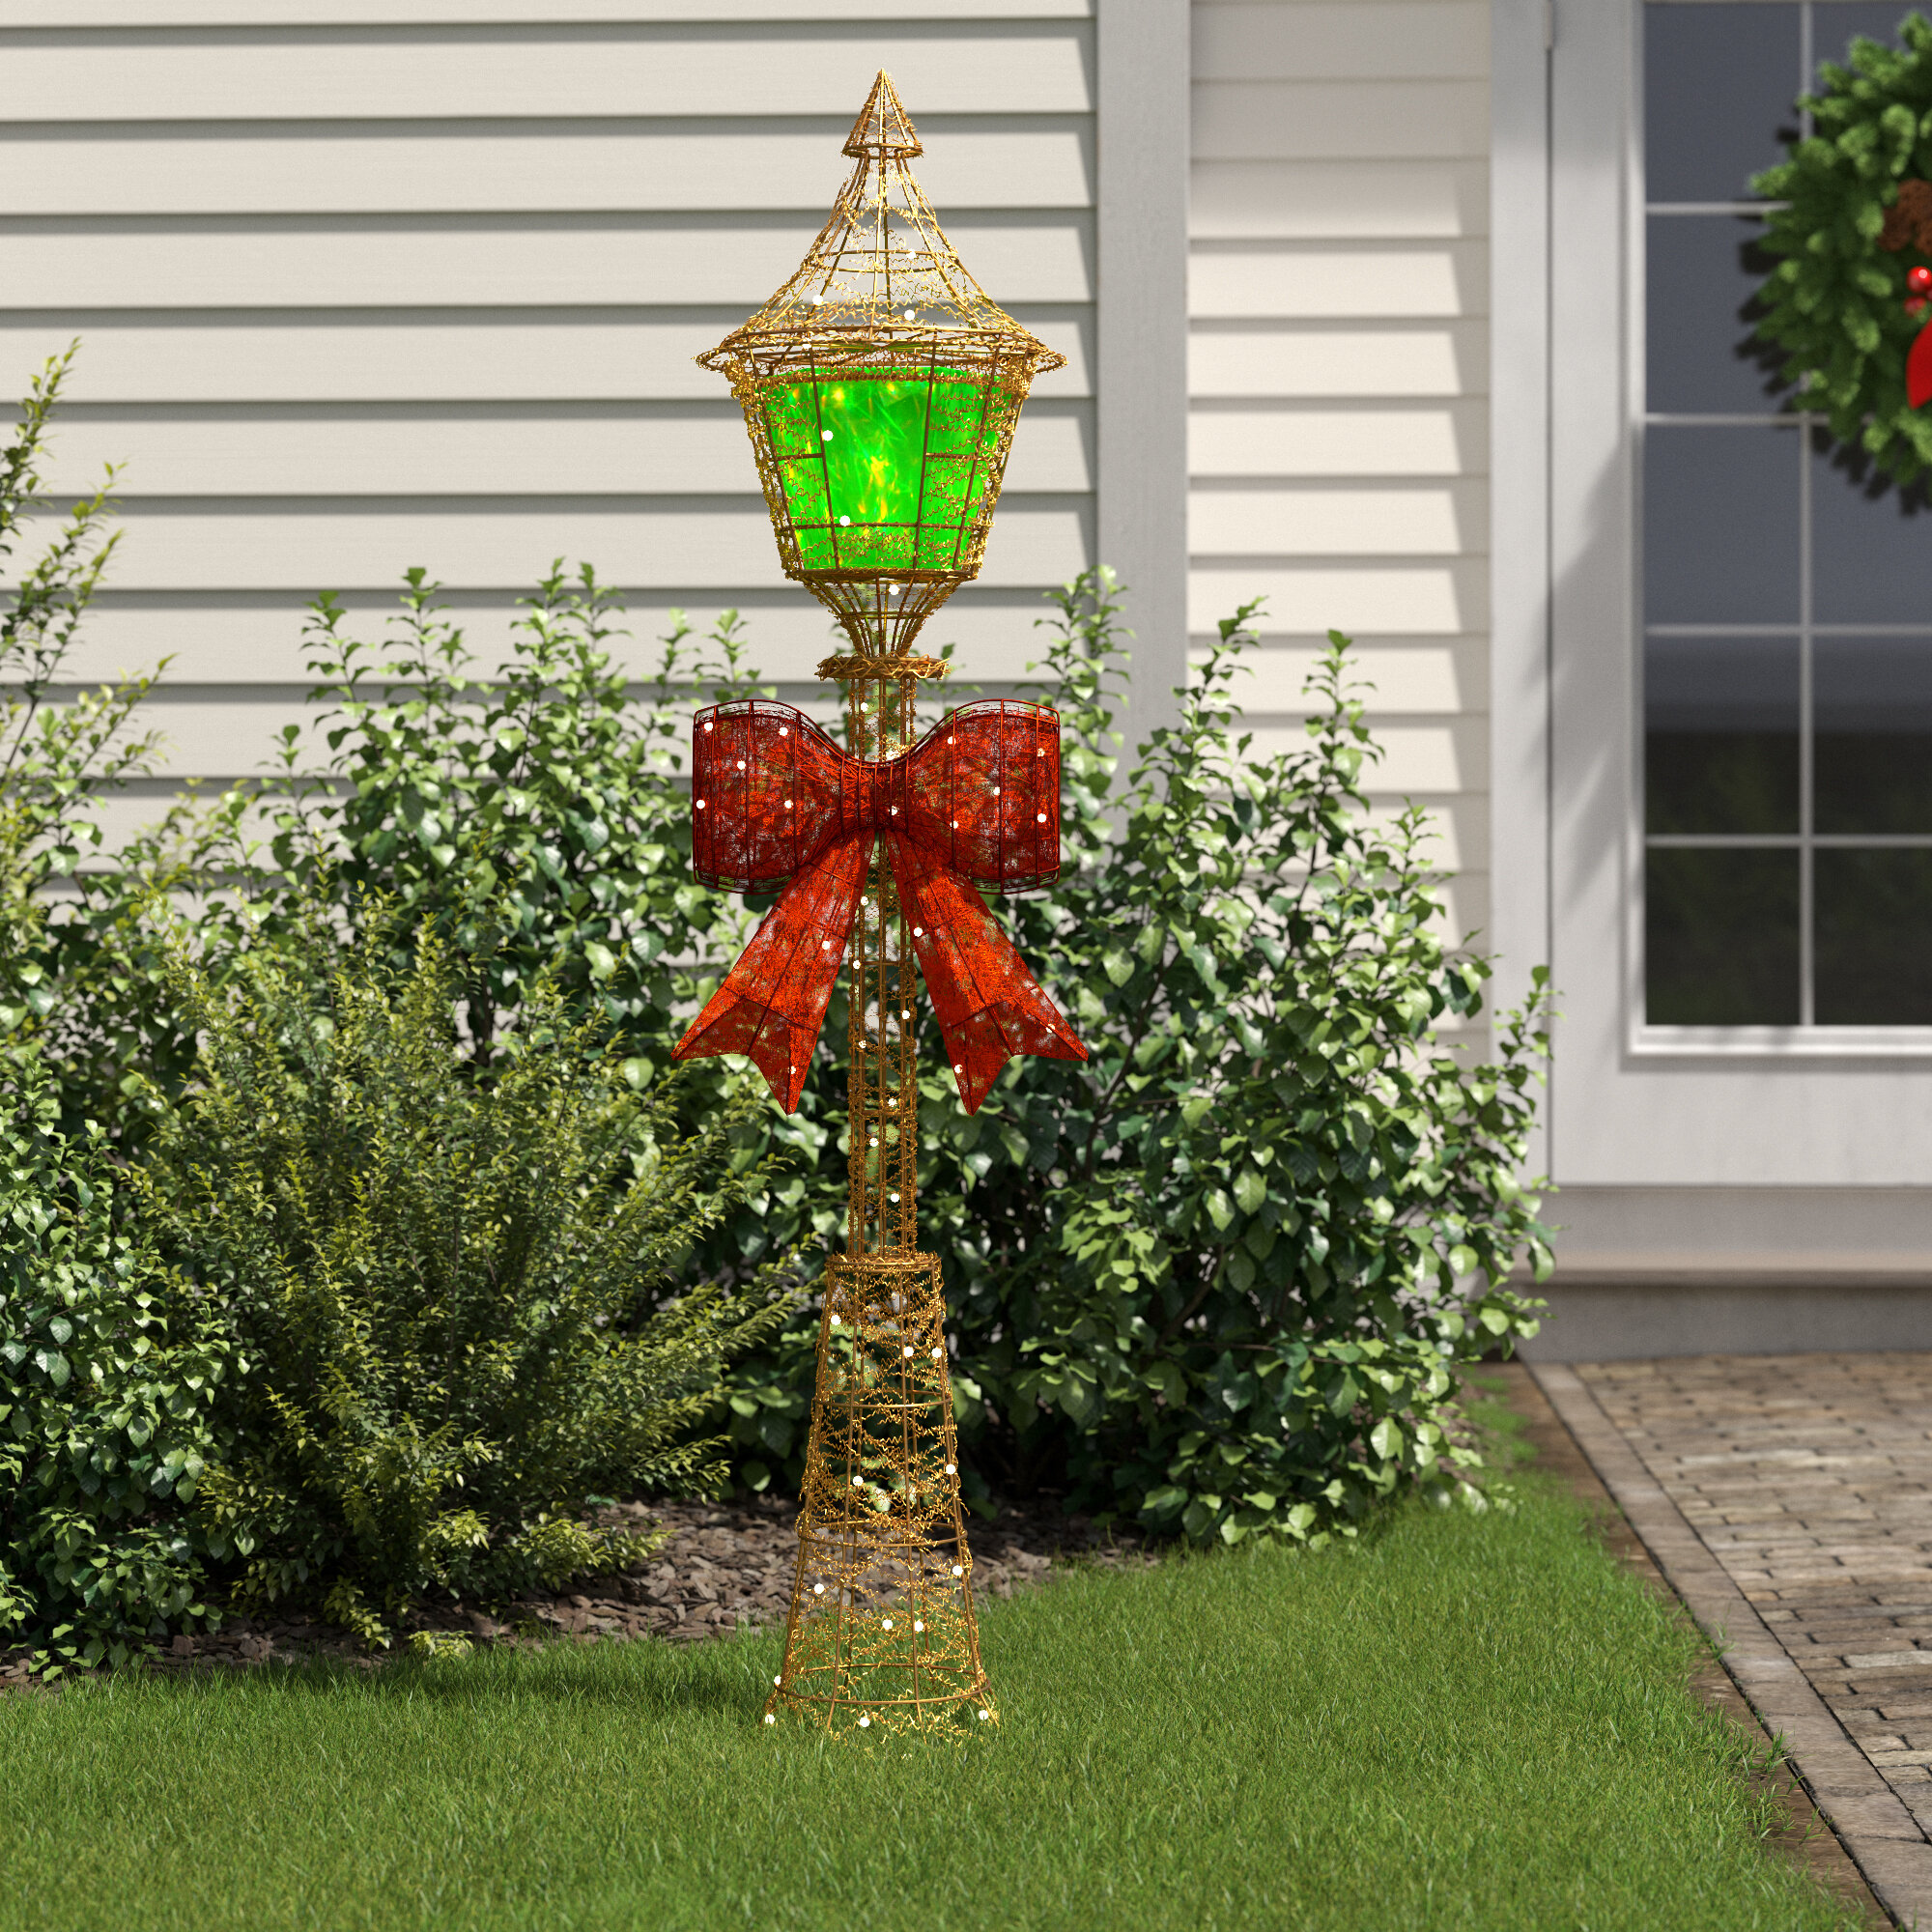 Three Posts™ Decorative Christmas Lamp Post Lighted Display & Reviews